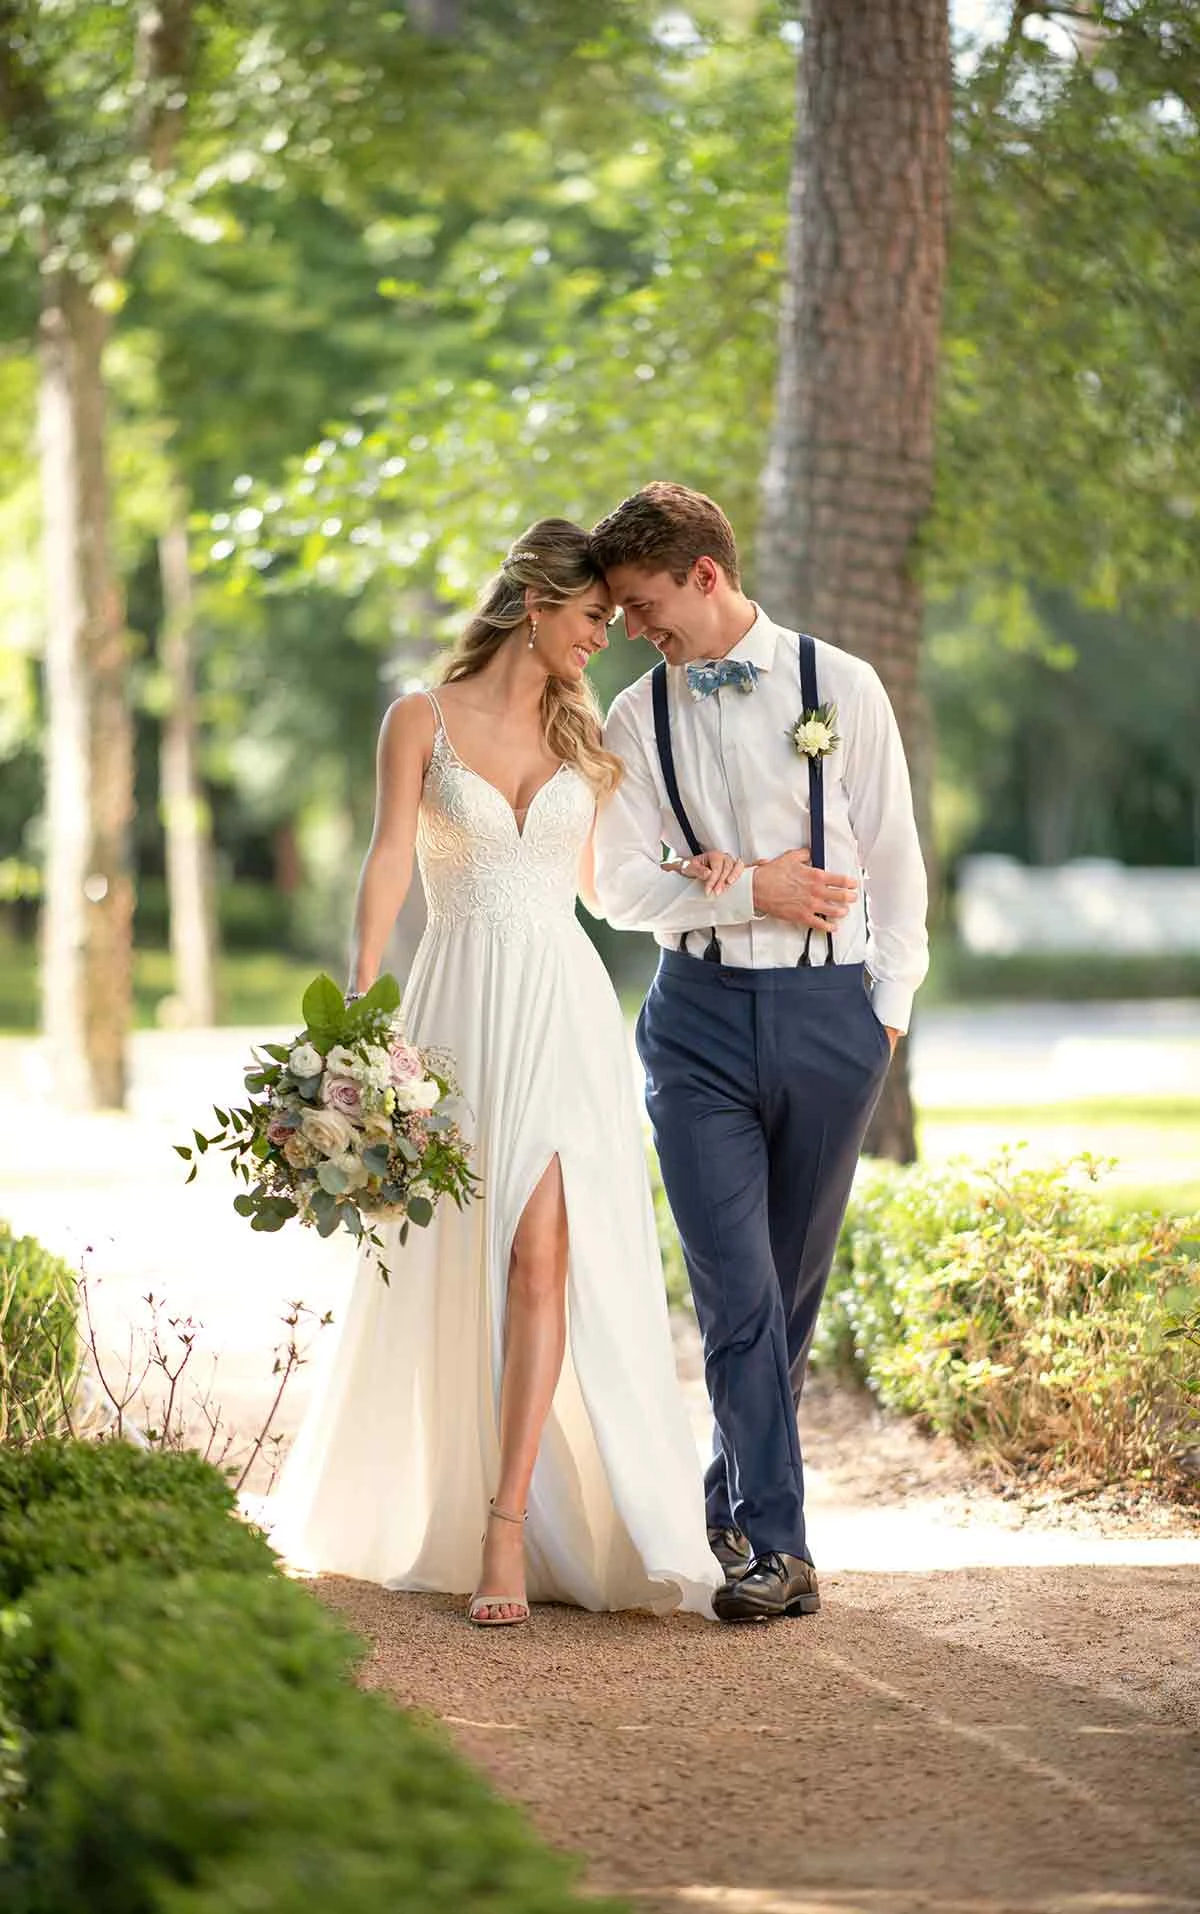 Casual Wedding Bride Online Hotsell, UP TO 56% OFF |  www.turismevallgorguina.com